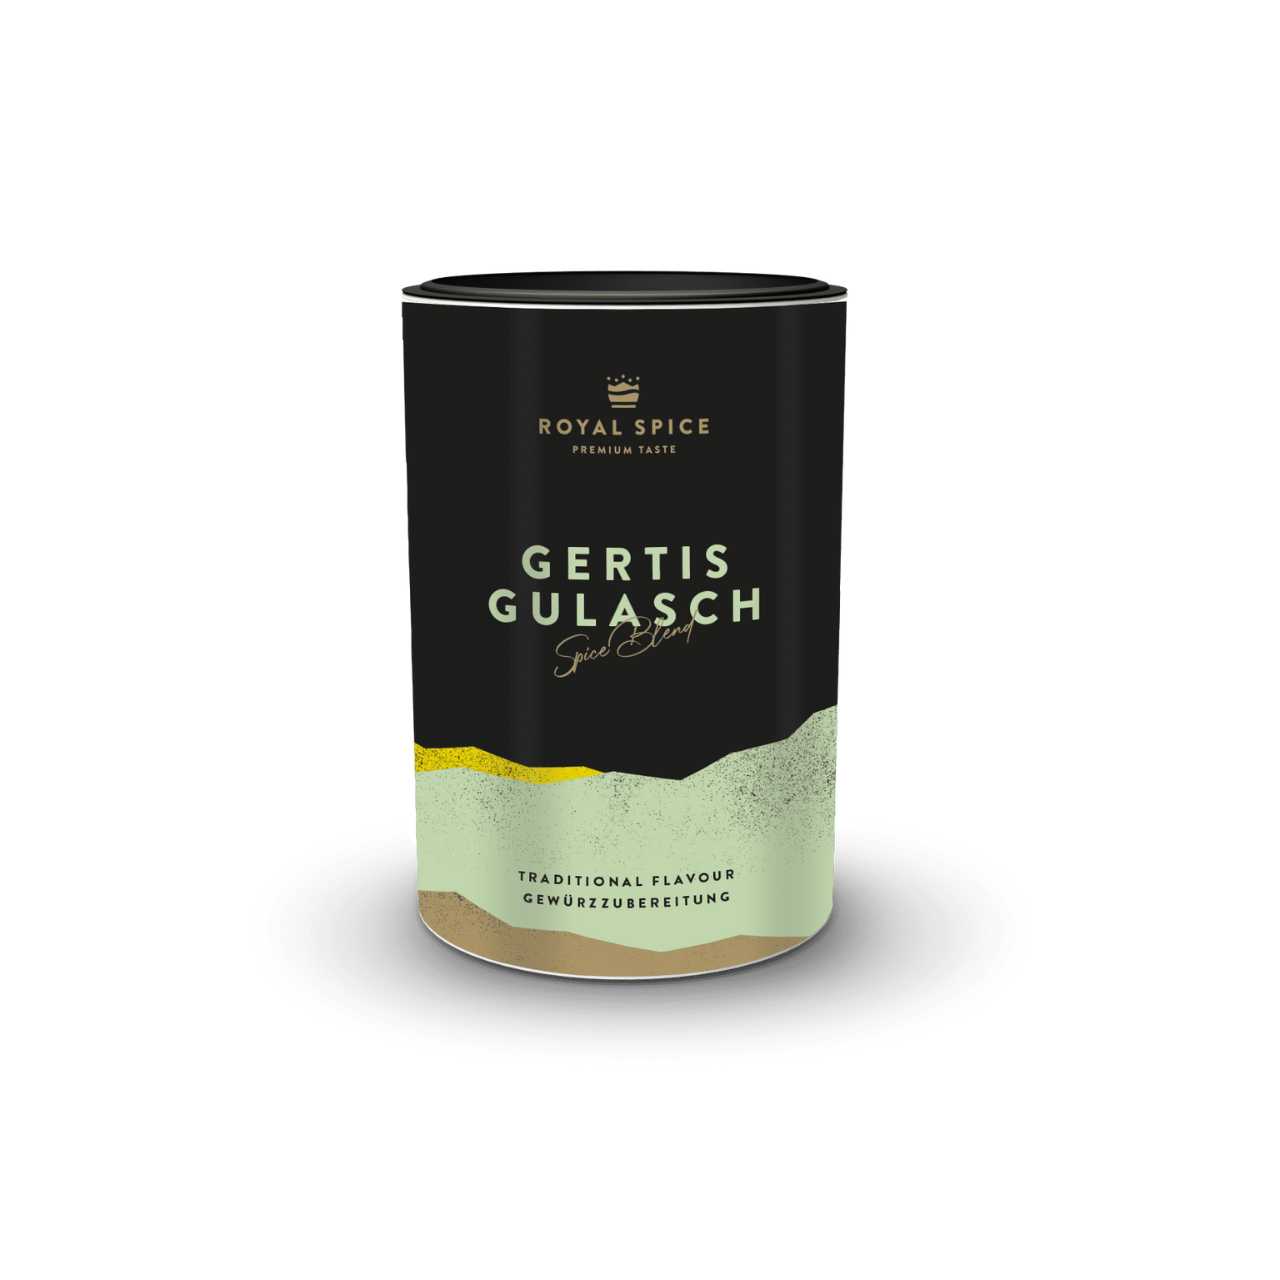 Royal Spice - Gertis Gulasch 100g